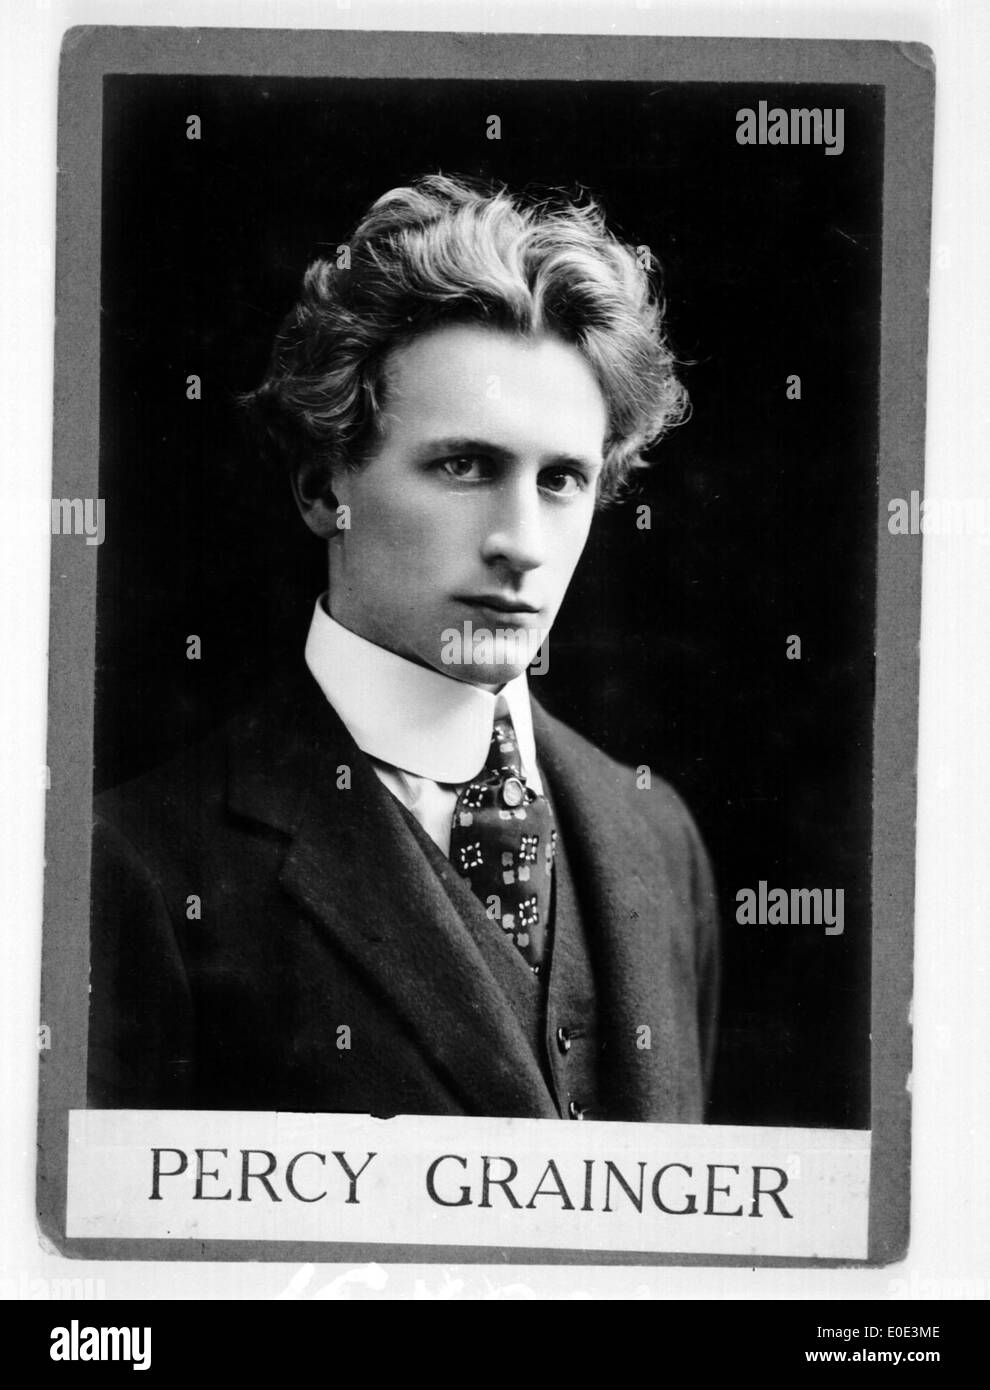 Percy Grainger portrait Stock Photo